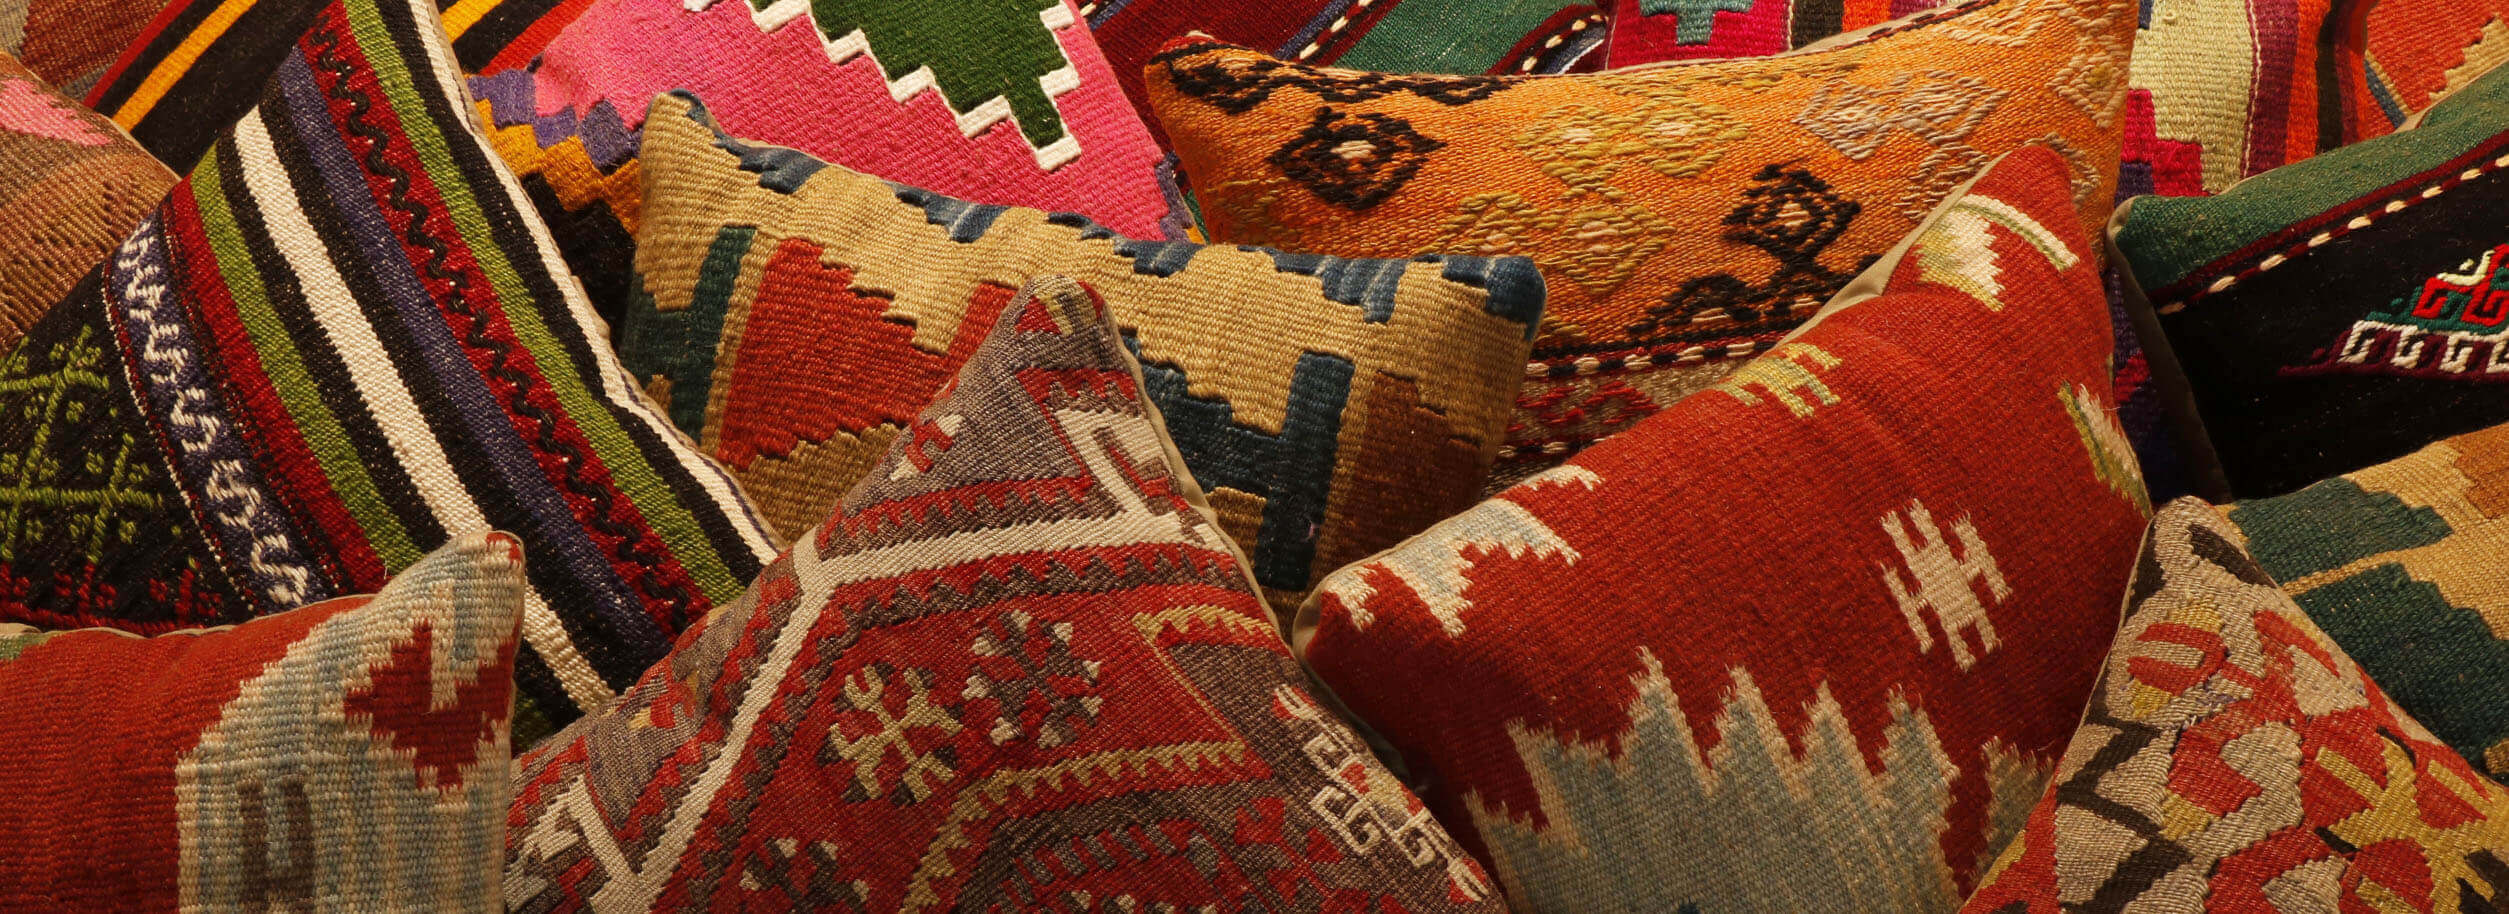 Cushions in salvaged Wool kilim or Silk